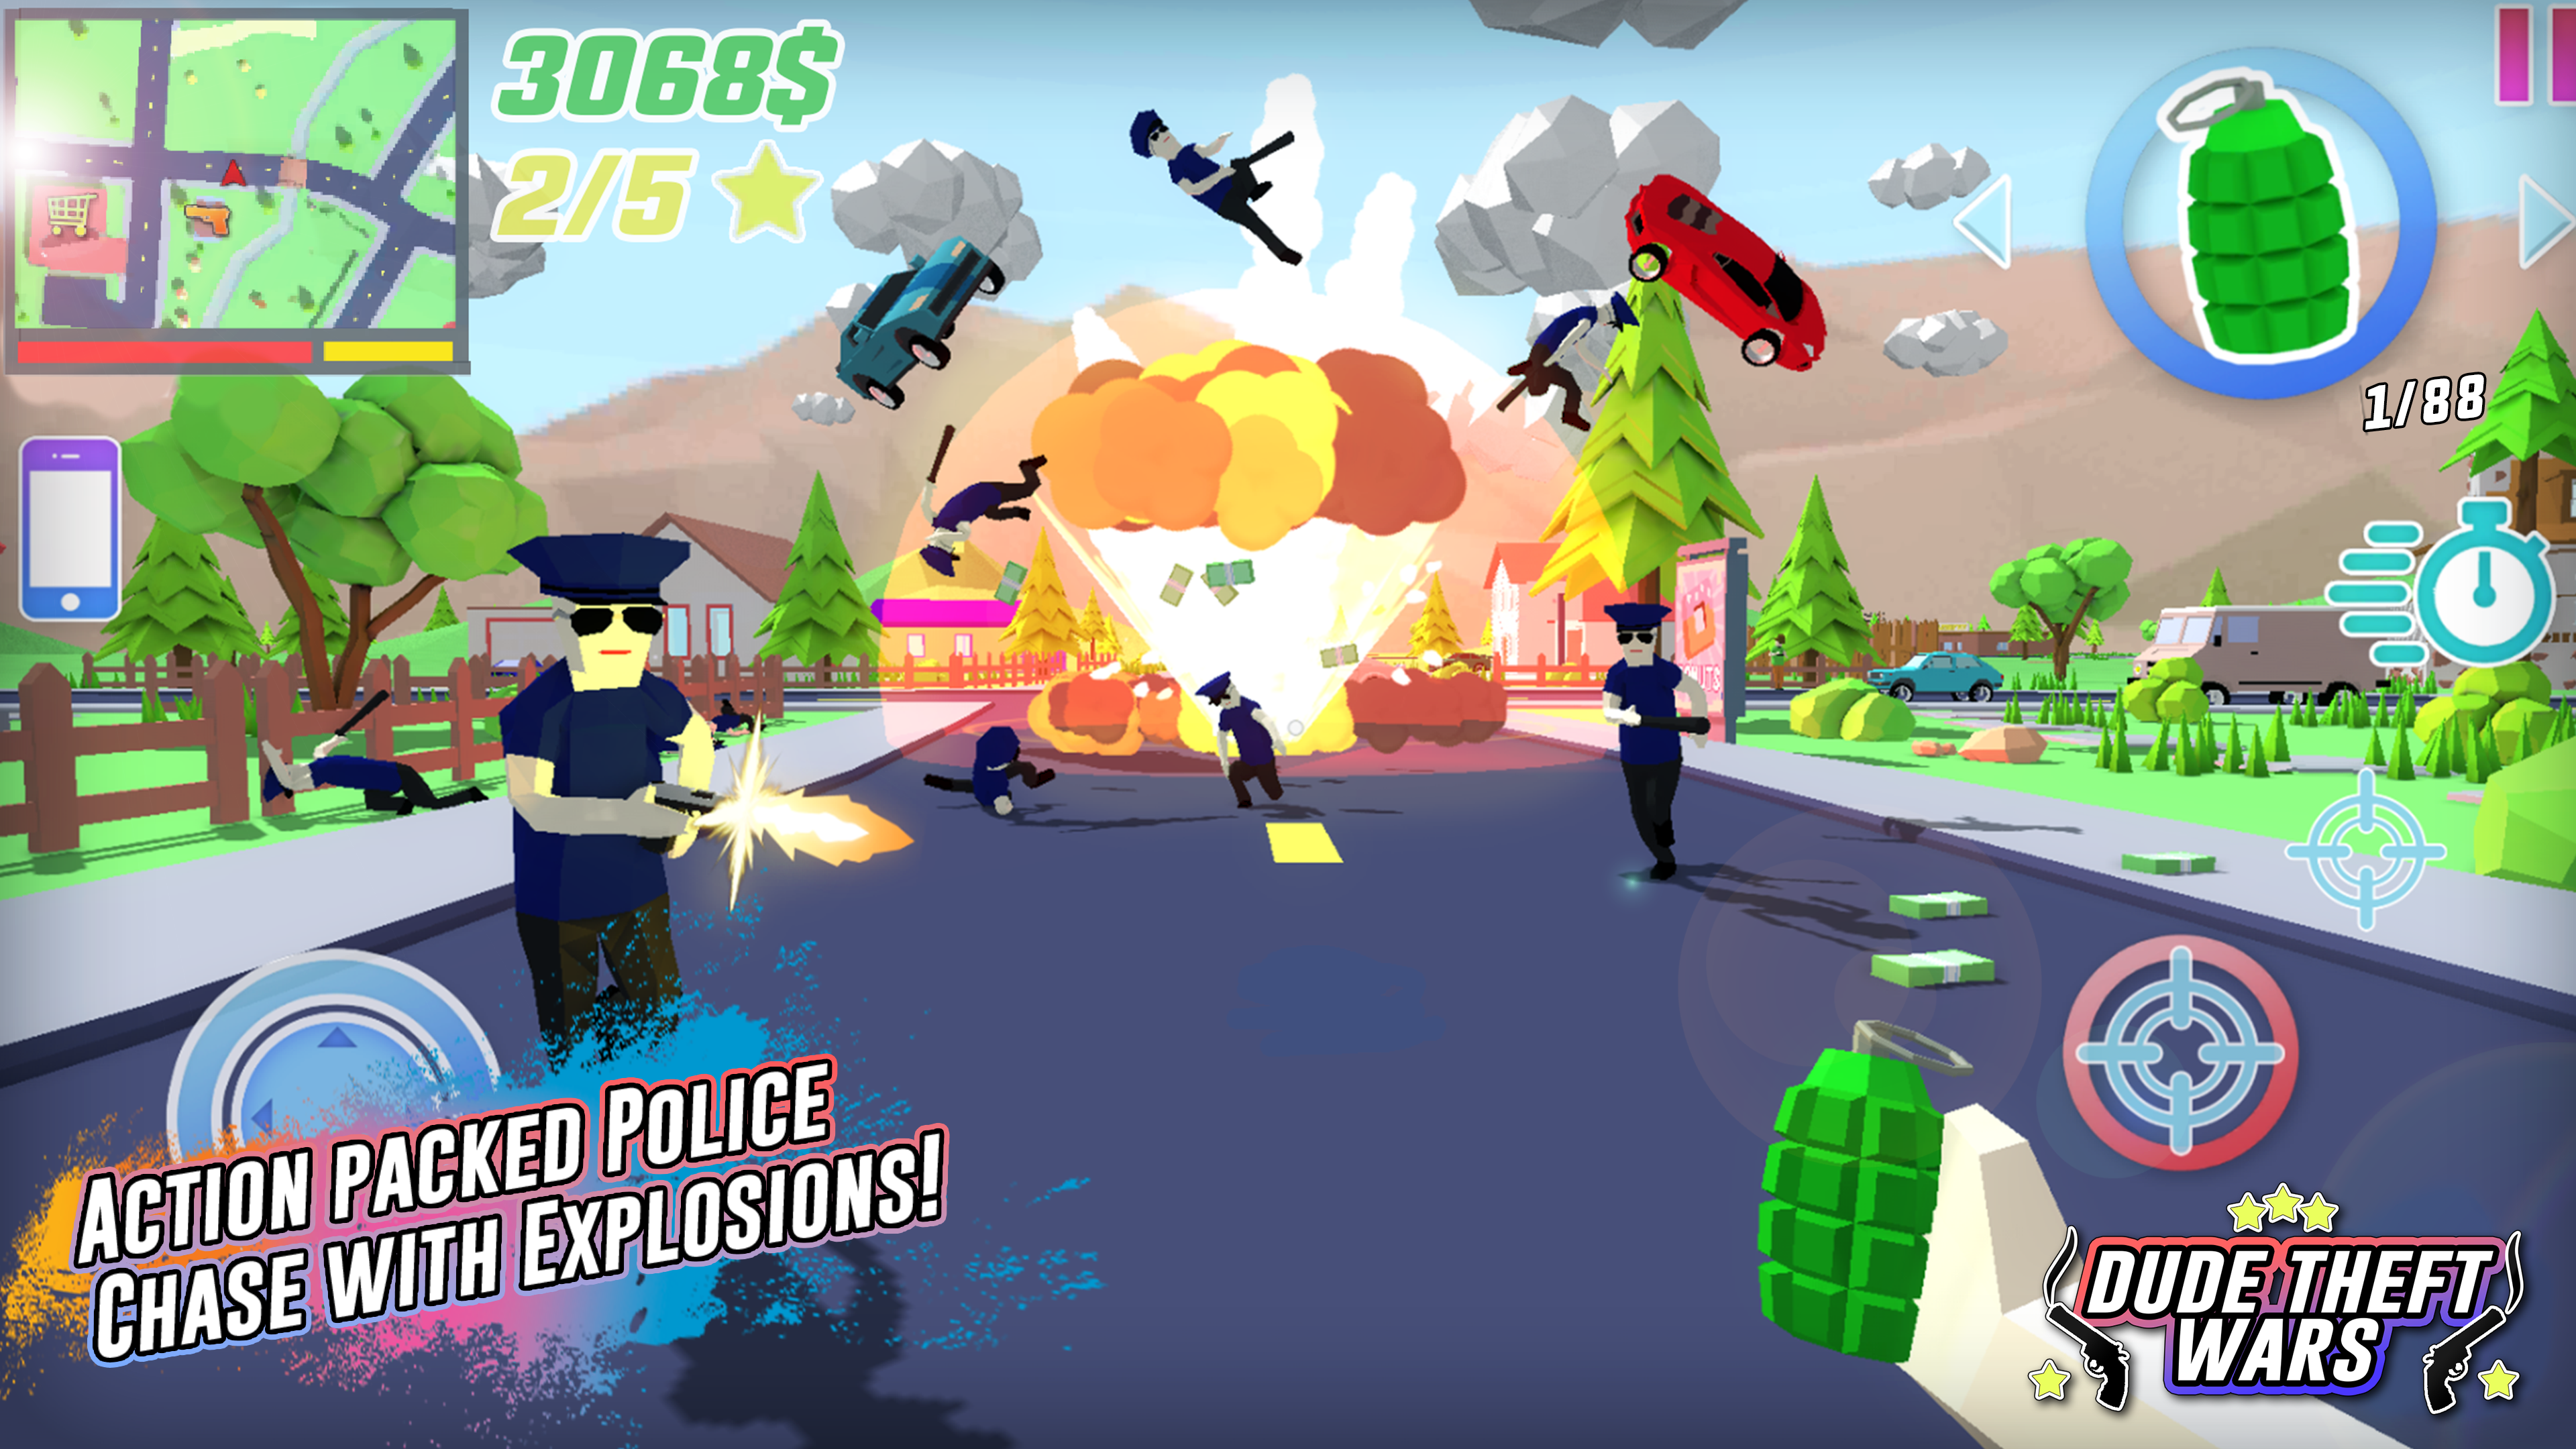 Screenshot 1 of Permainan Menembak Dude Theft Wars 0.9.0.9c2